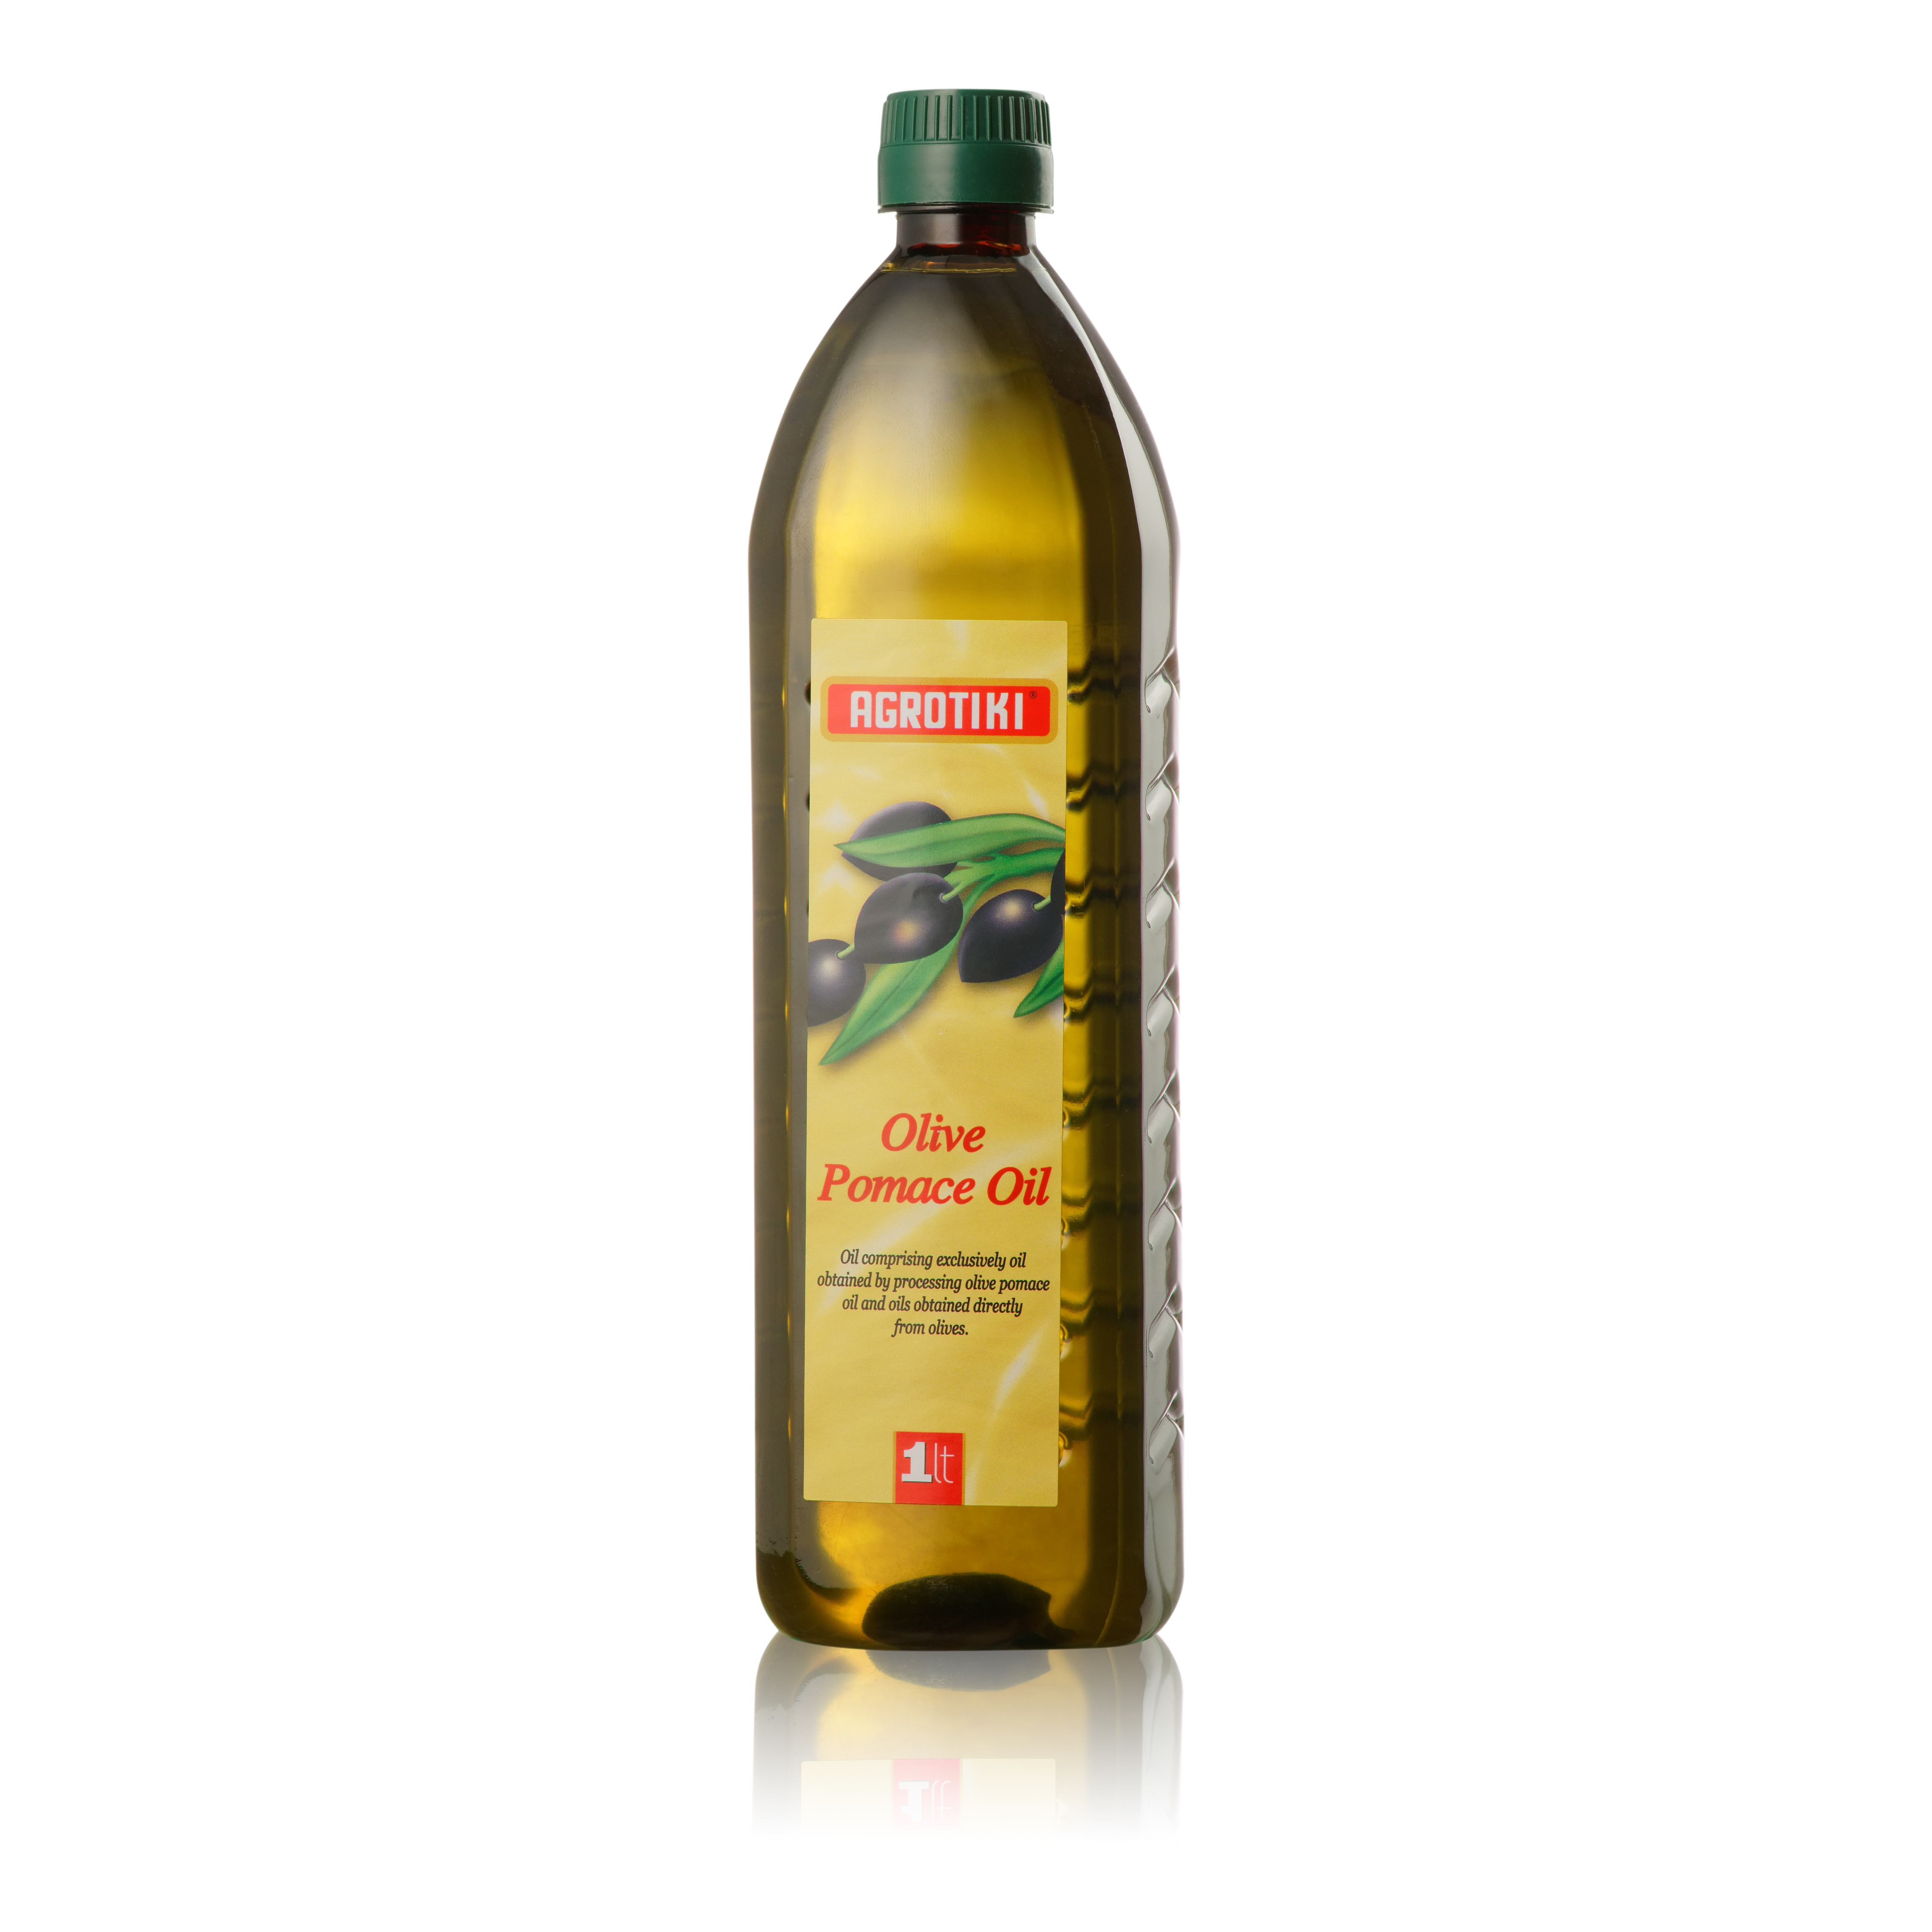 Масло оливковое помас